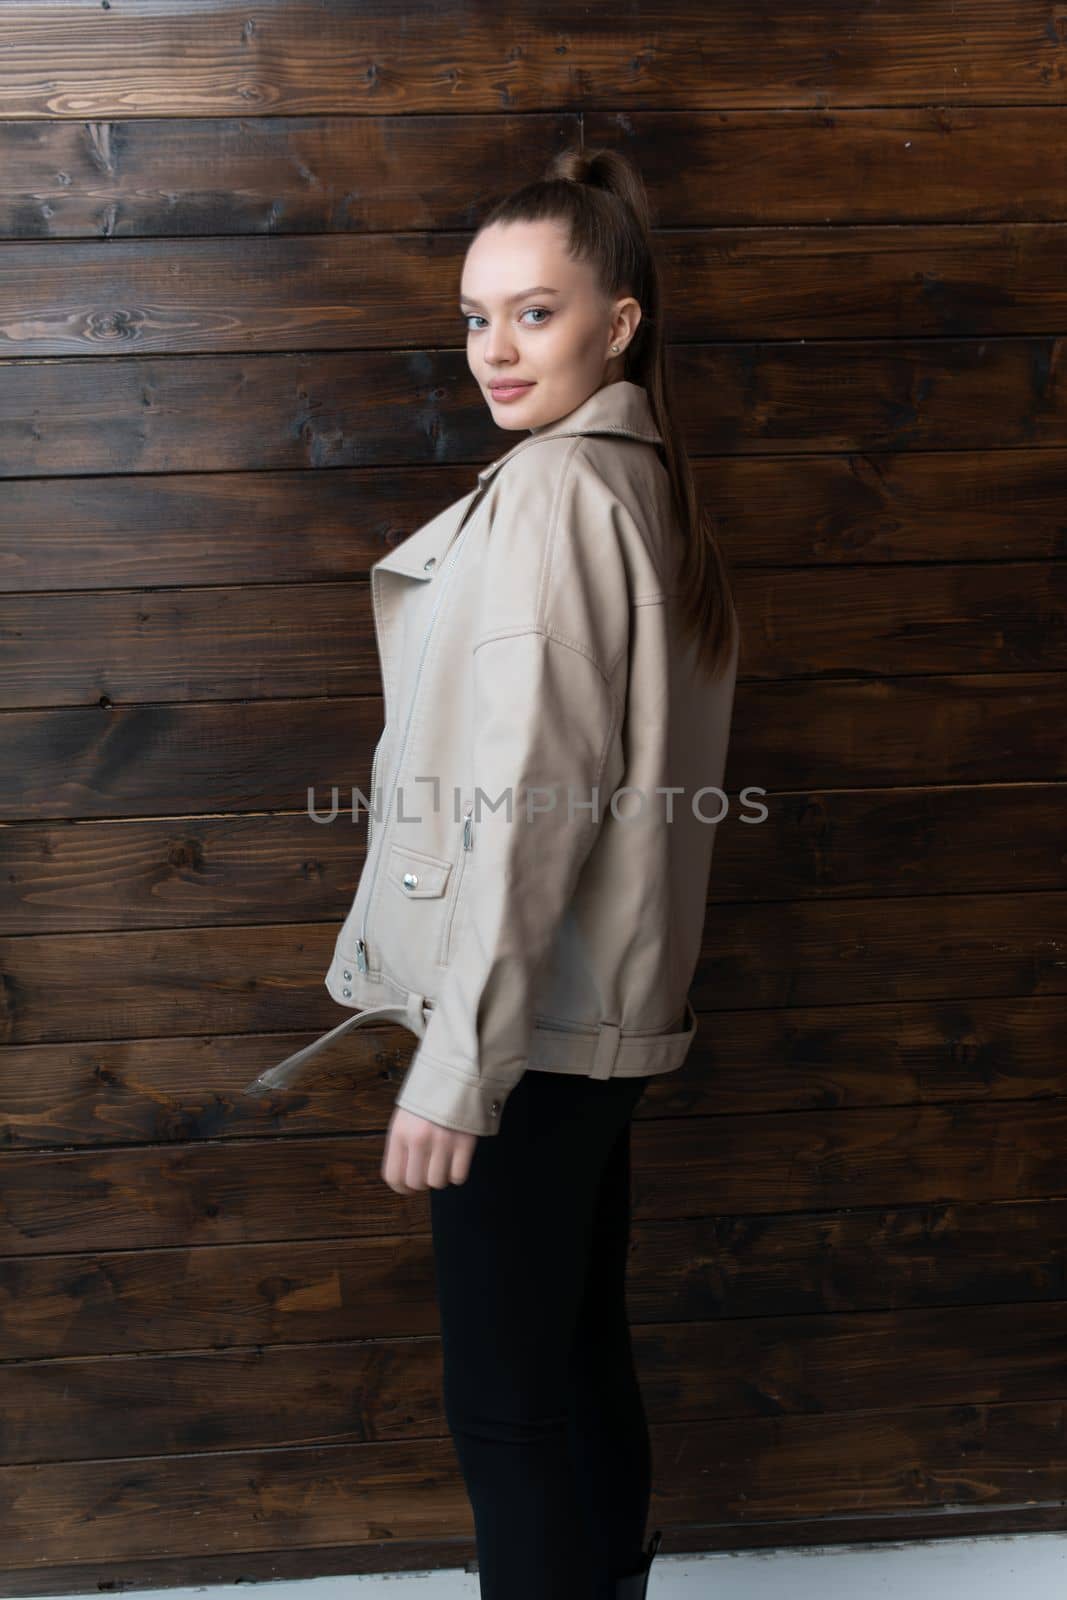 woman beige jacket beauty style fashion young model portrait leather female stylish